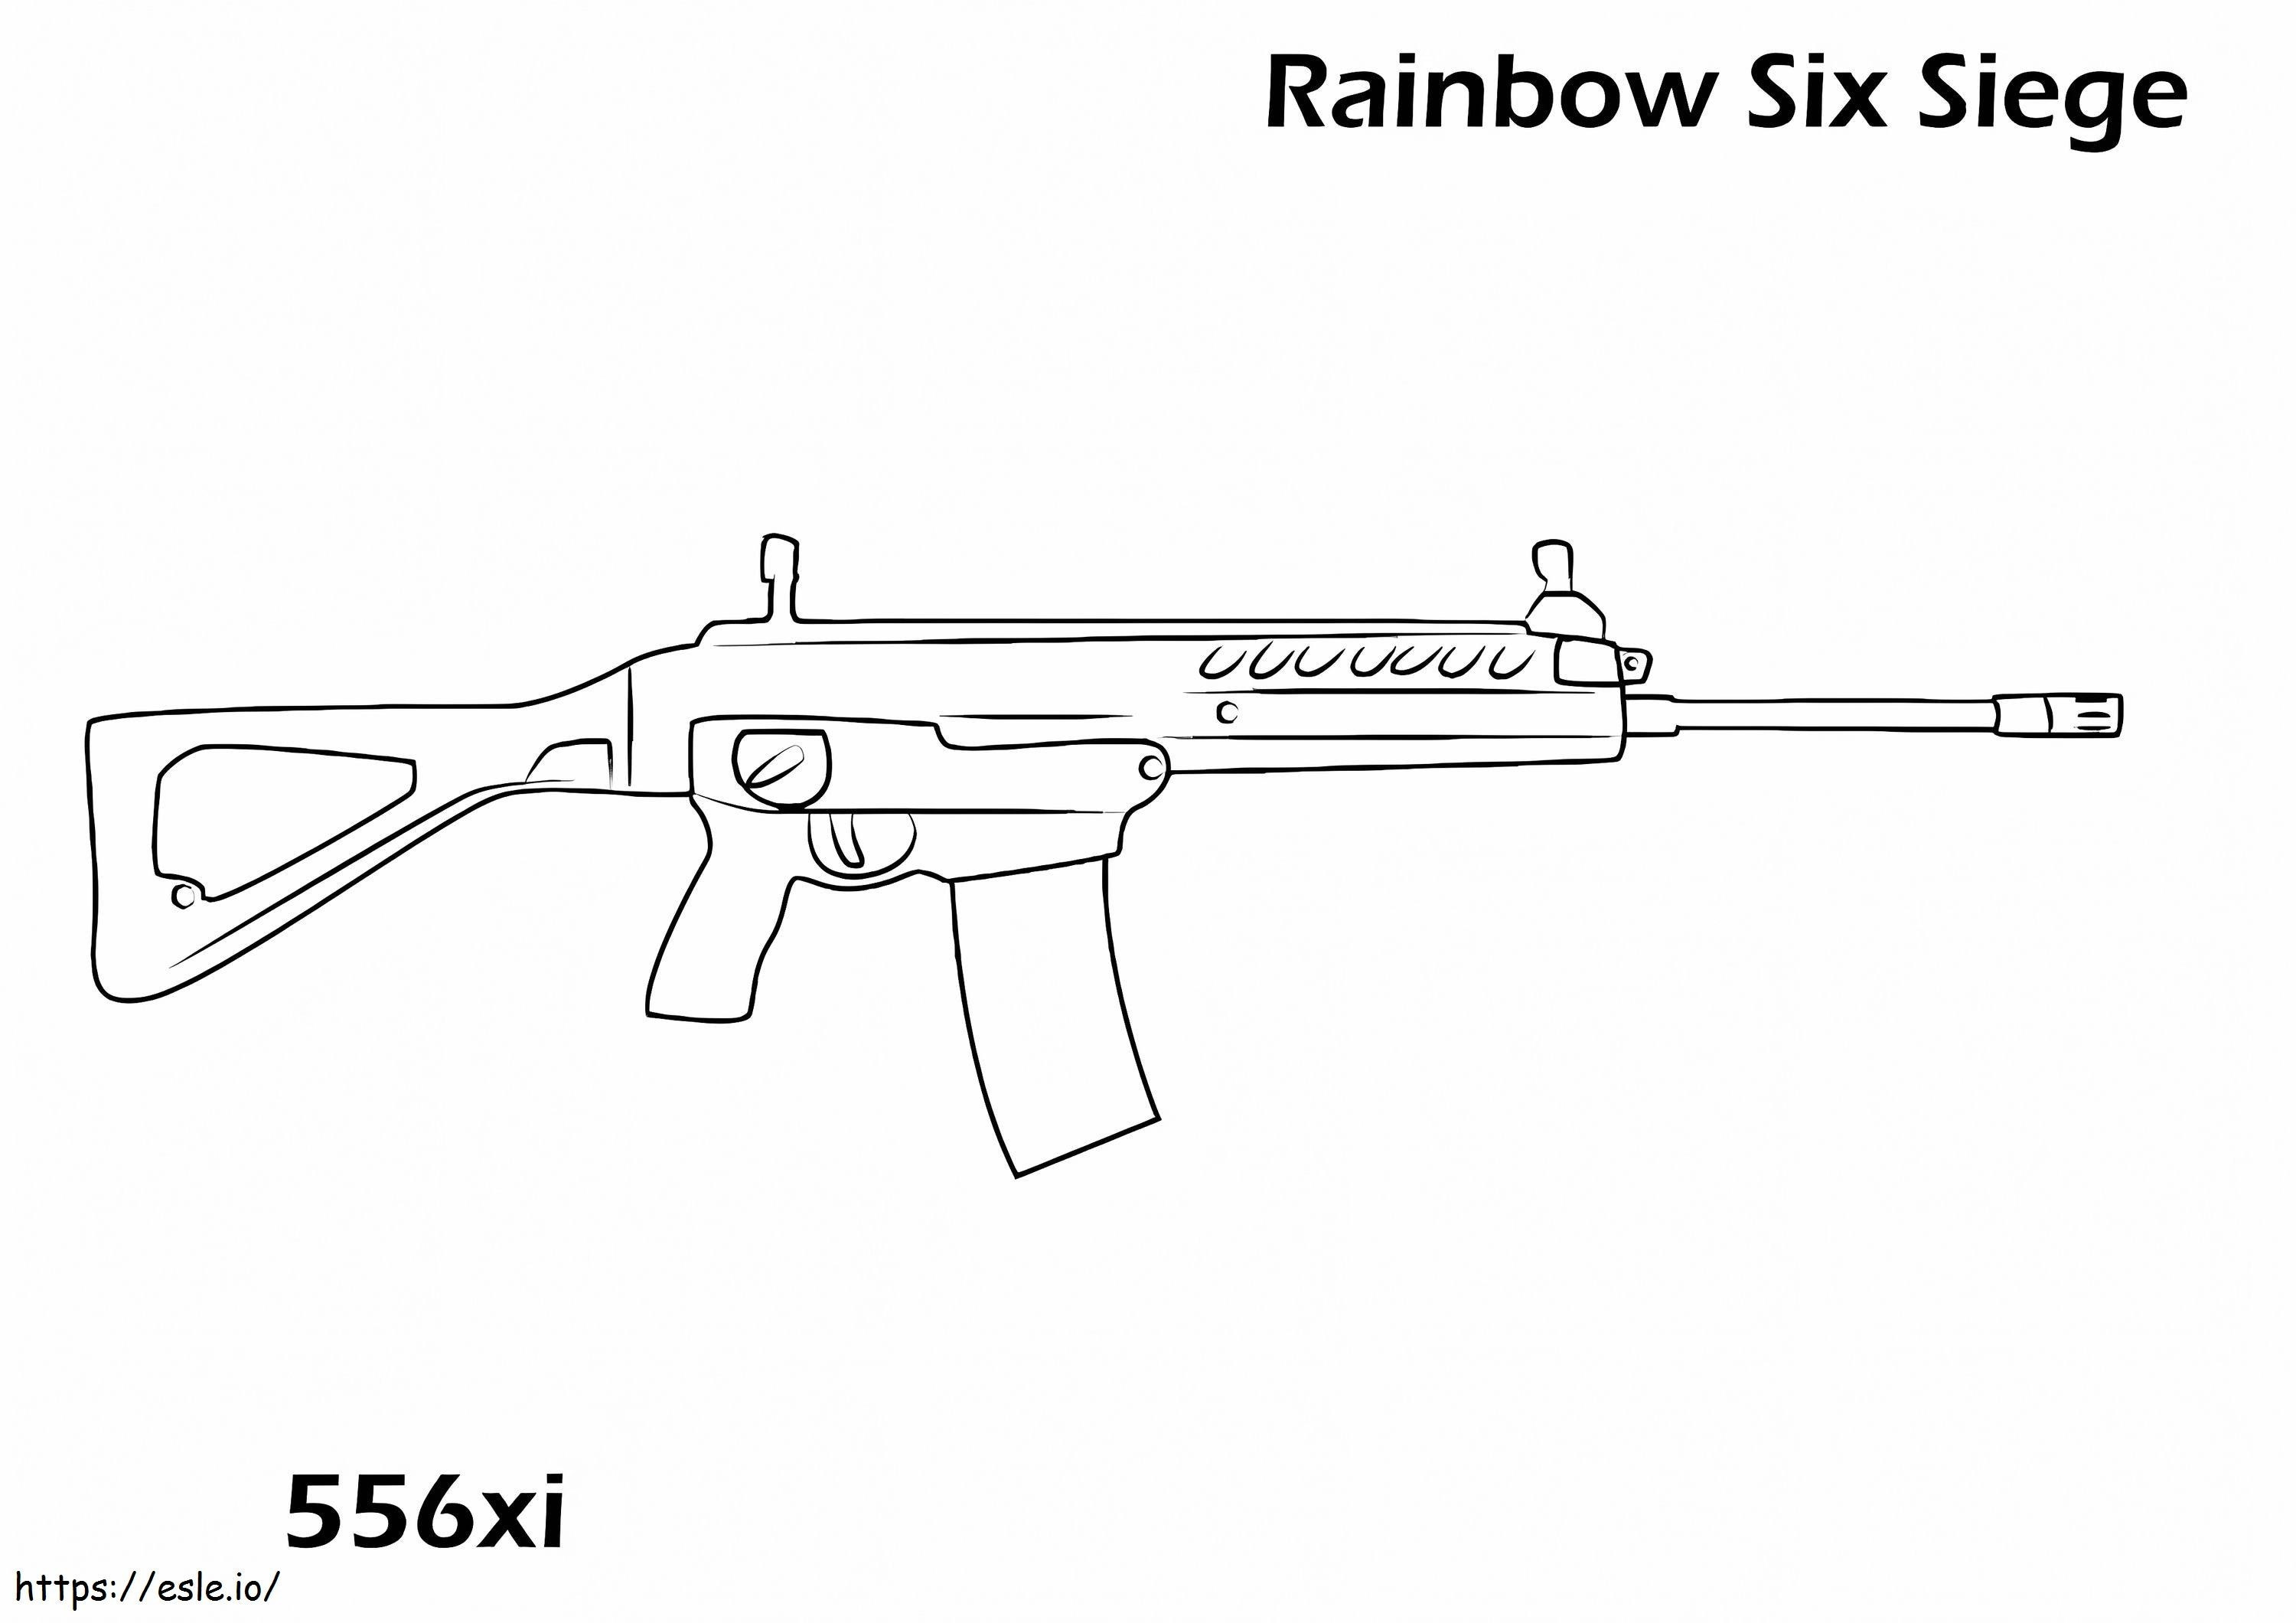 556Xi Rainbow Six Siege coloring page